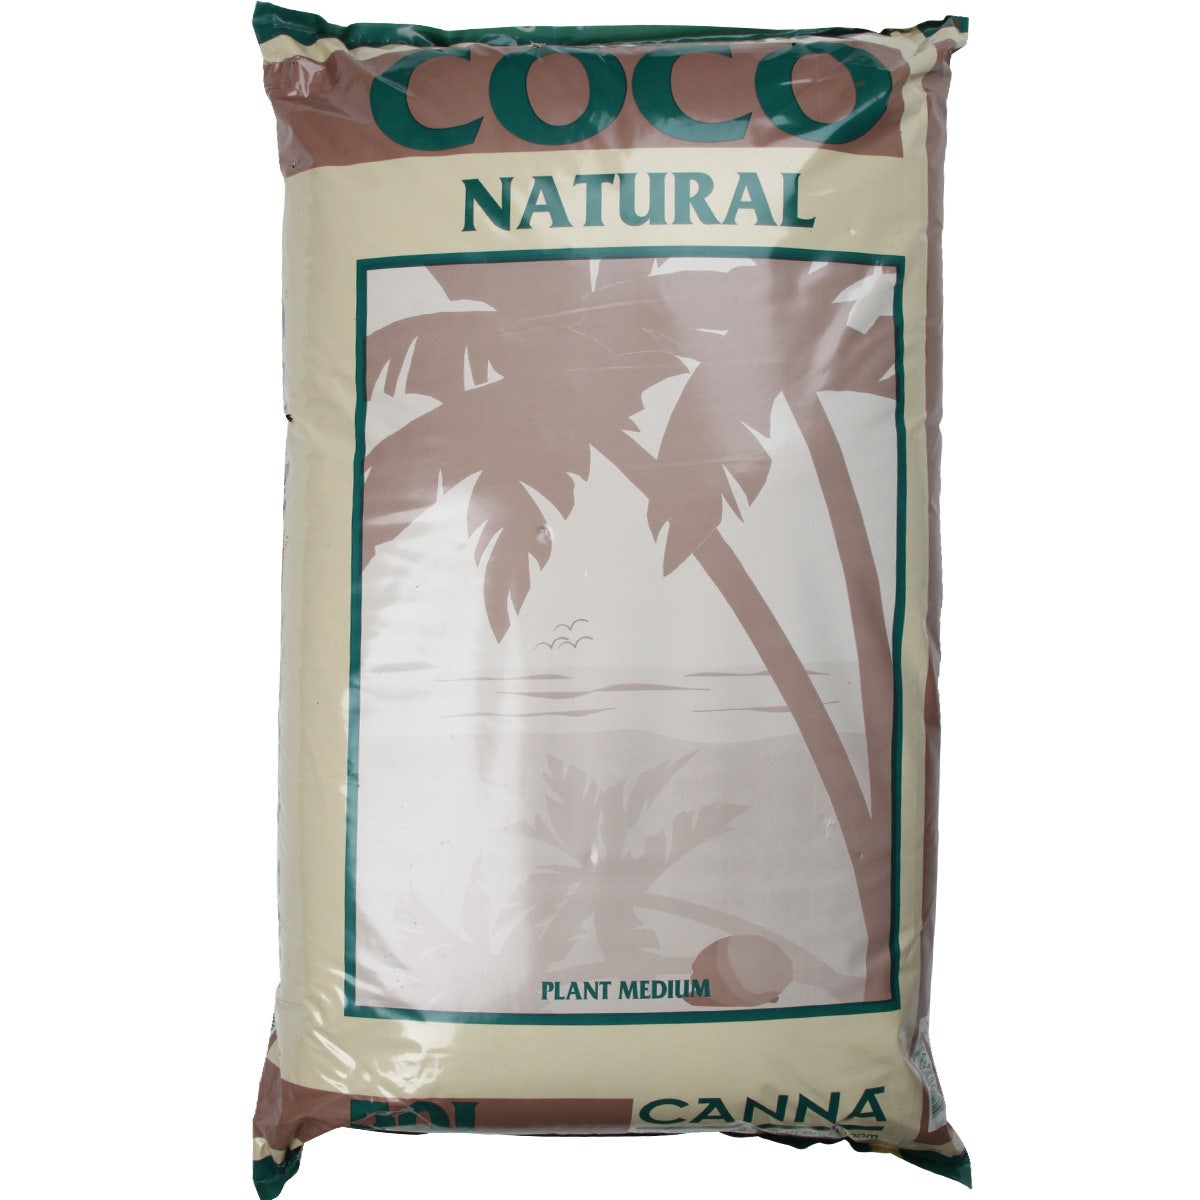 Canna Coco Natural 50 Litres